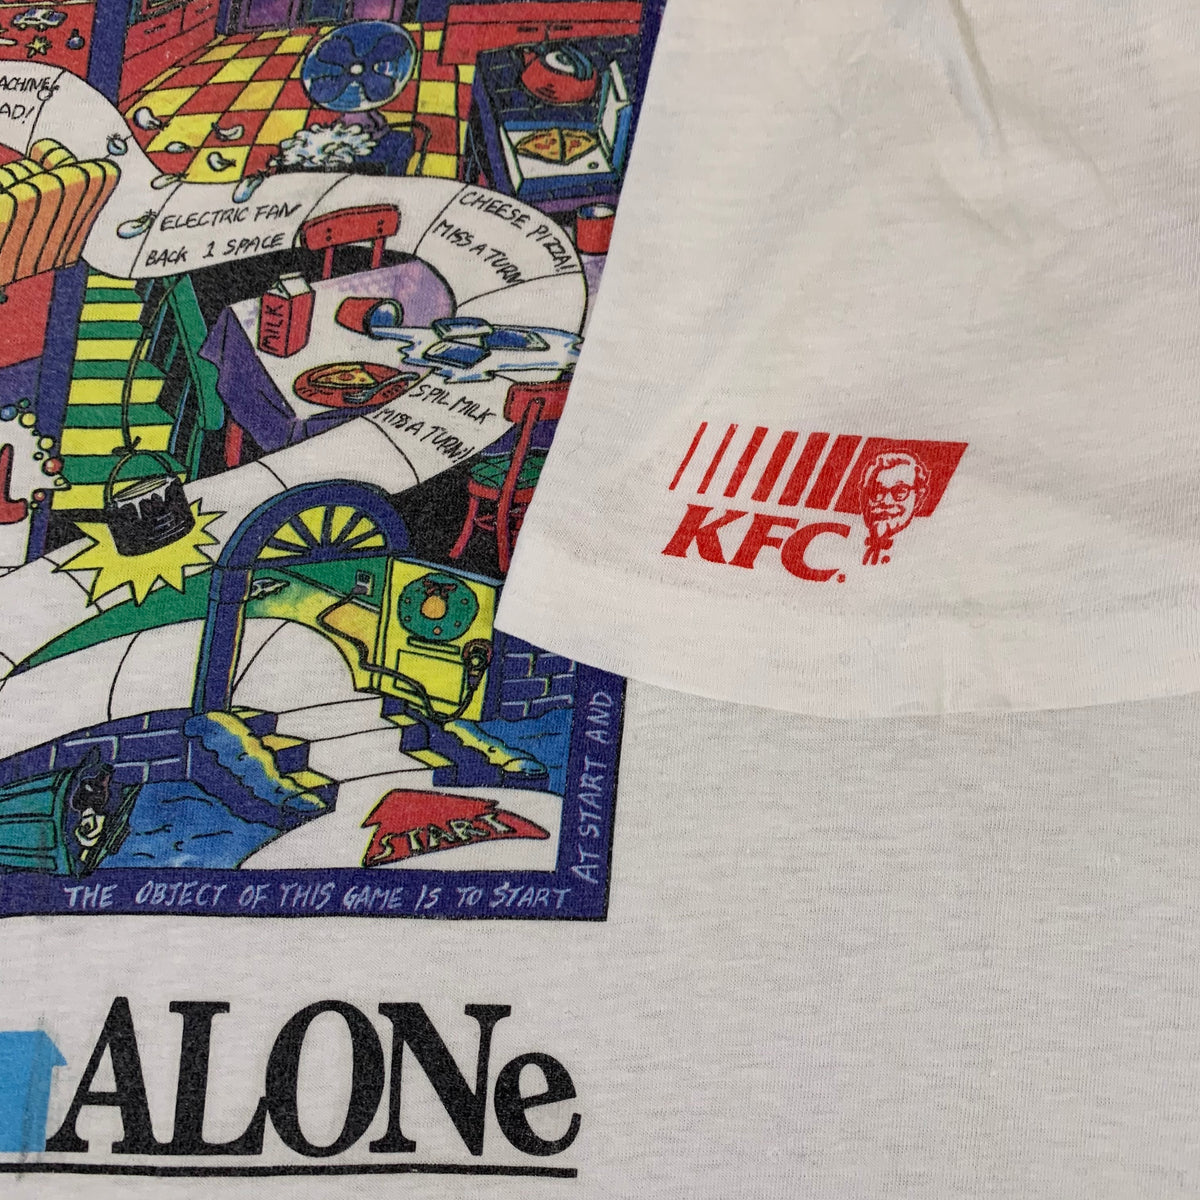 Vintage Home Alone &quot;Twentieth Century Fox&quot; KFC T-Shirt